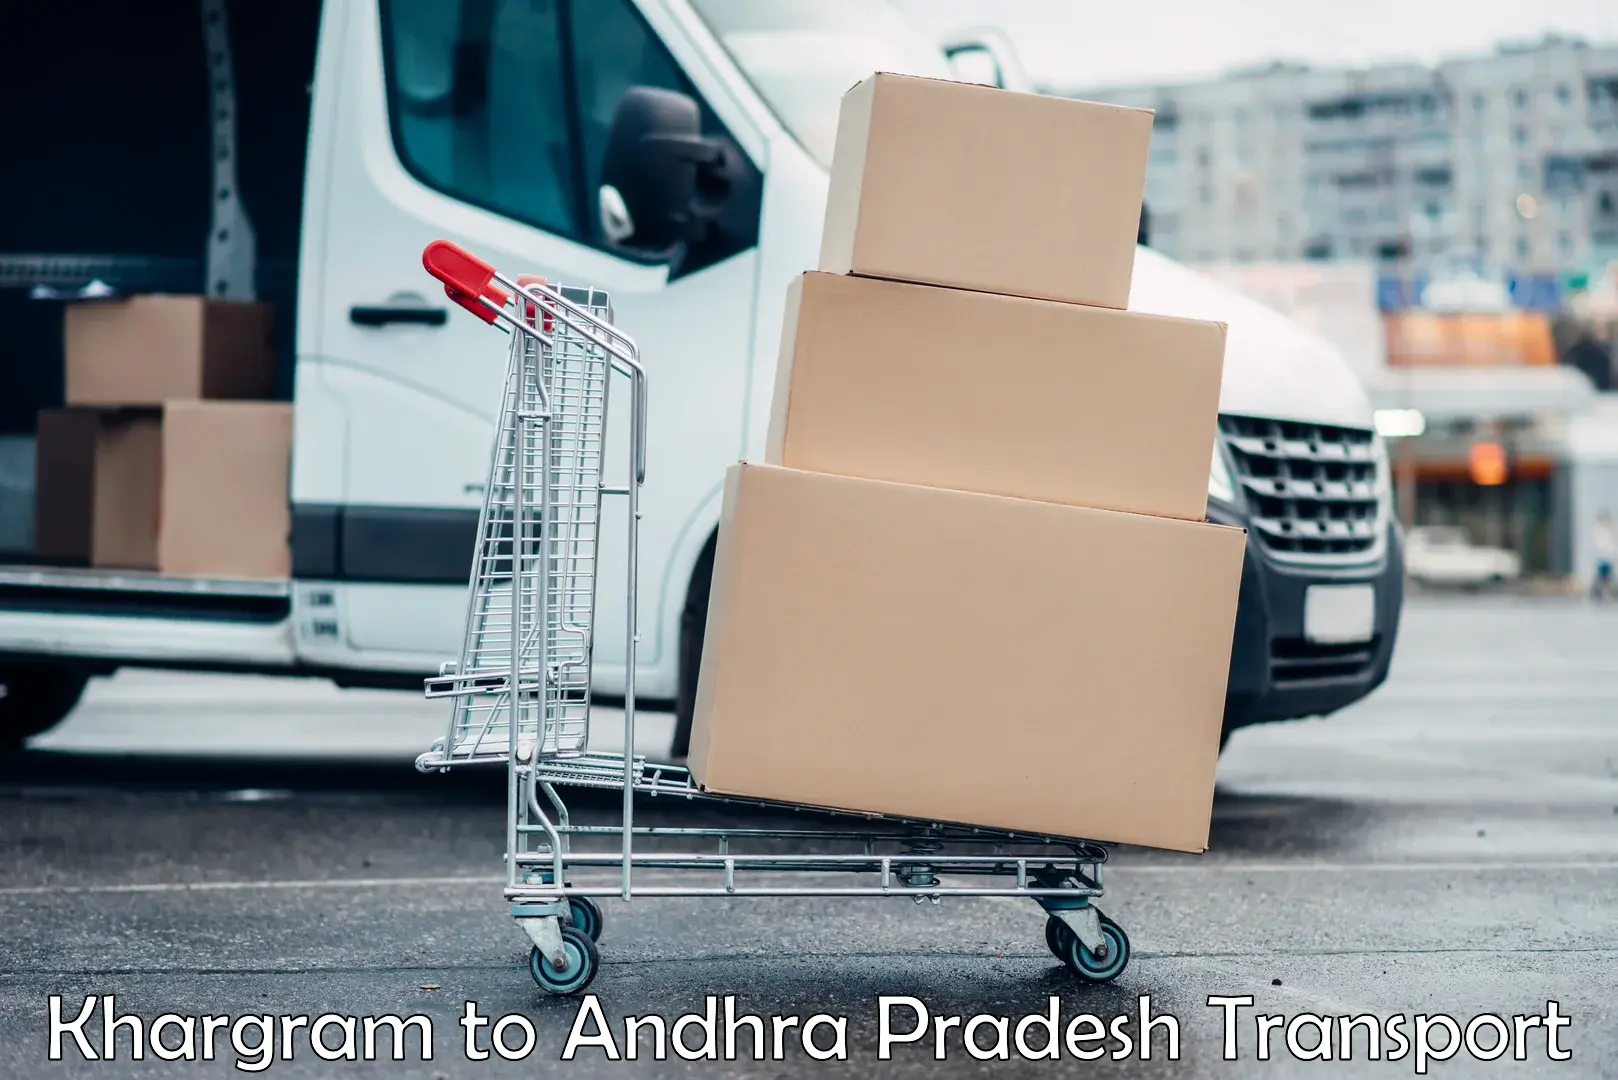 Truck transport companies in India Khargram to Annavaram